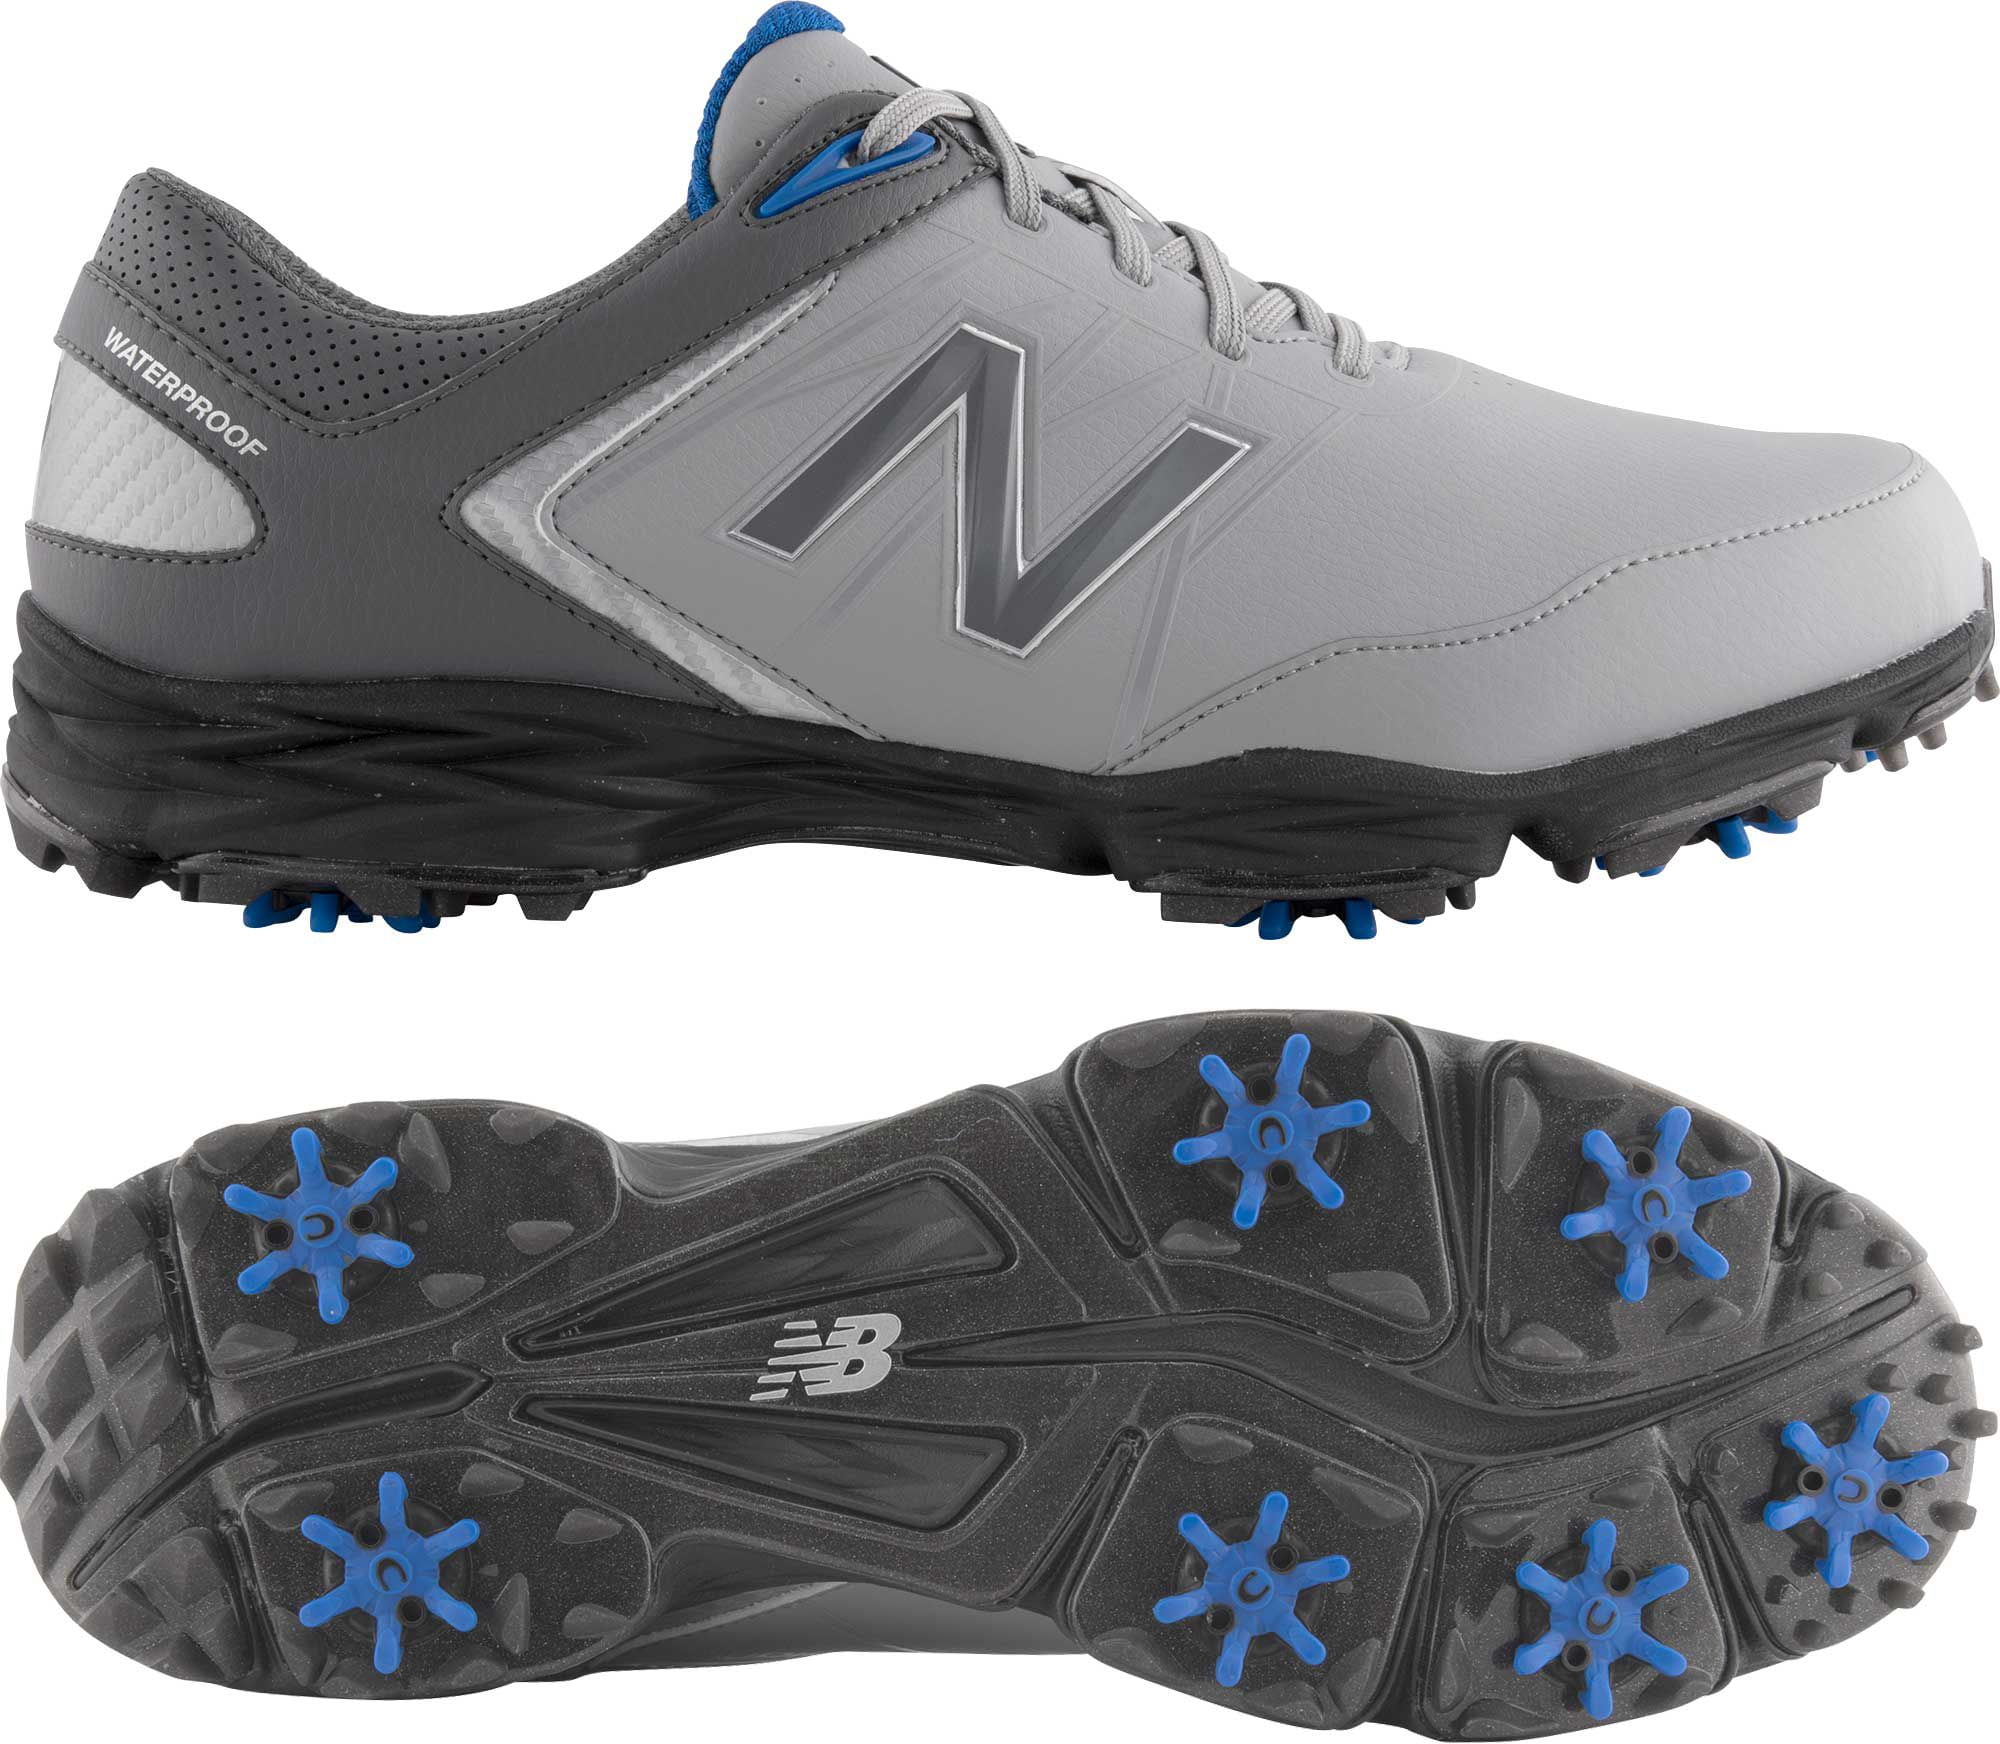 new balance striker golf shoes review